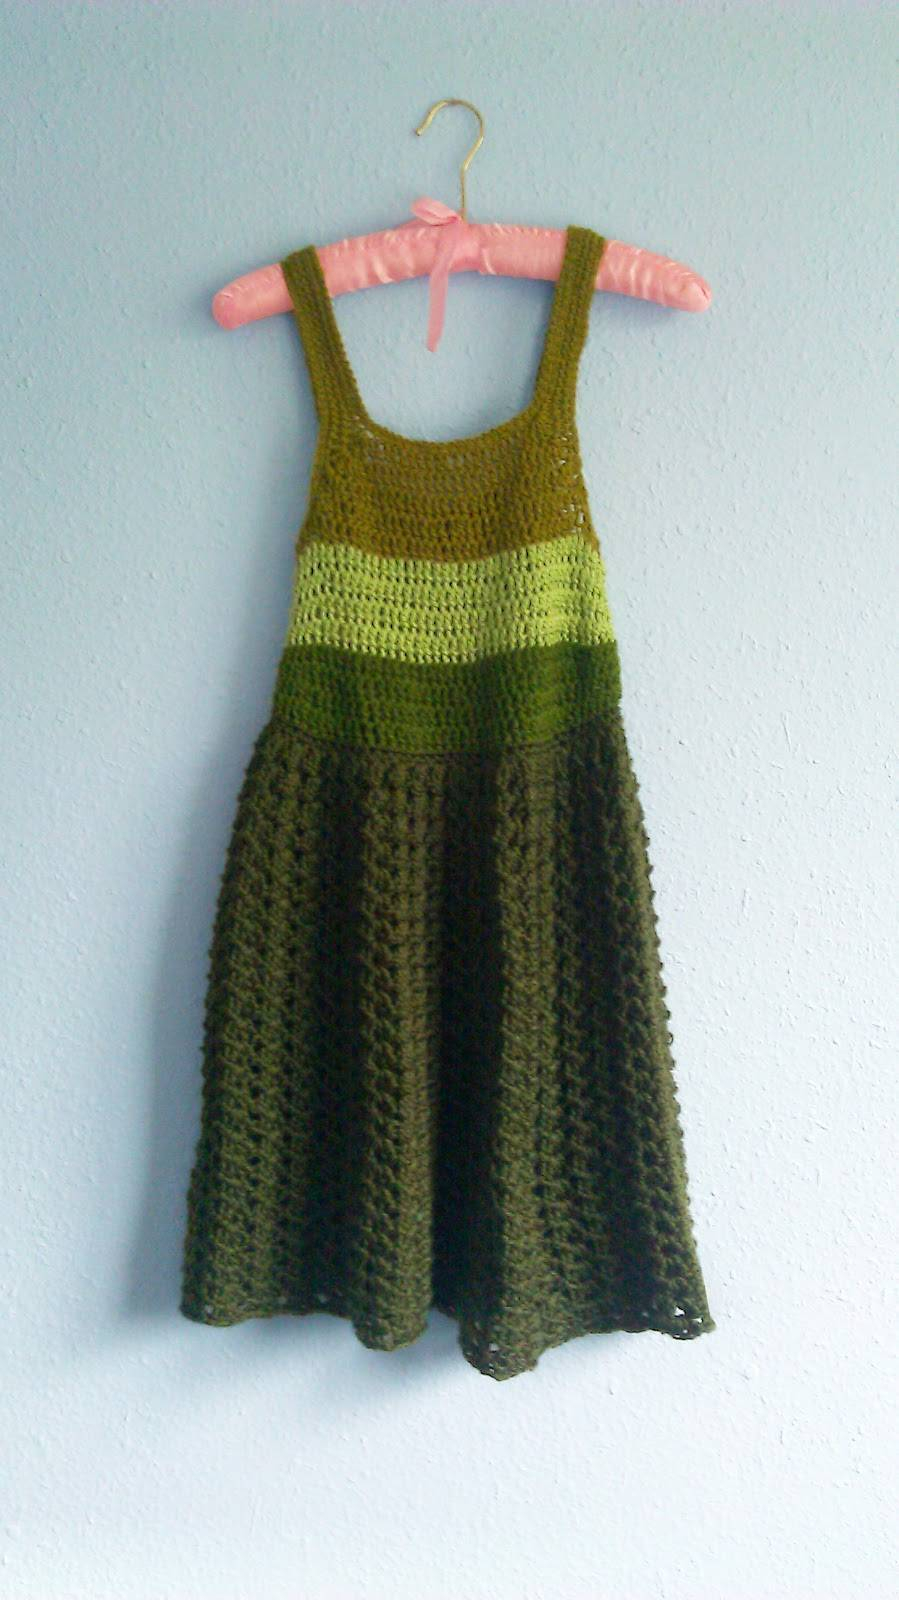 Crochet Clothing Patterns 15 Beautiful Free Crochet Dress Patterns For Women Crochet